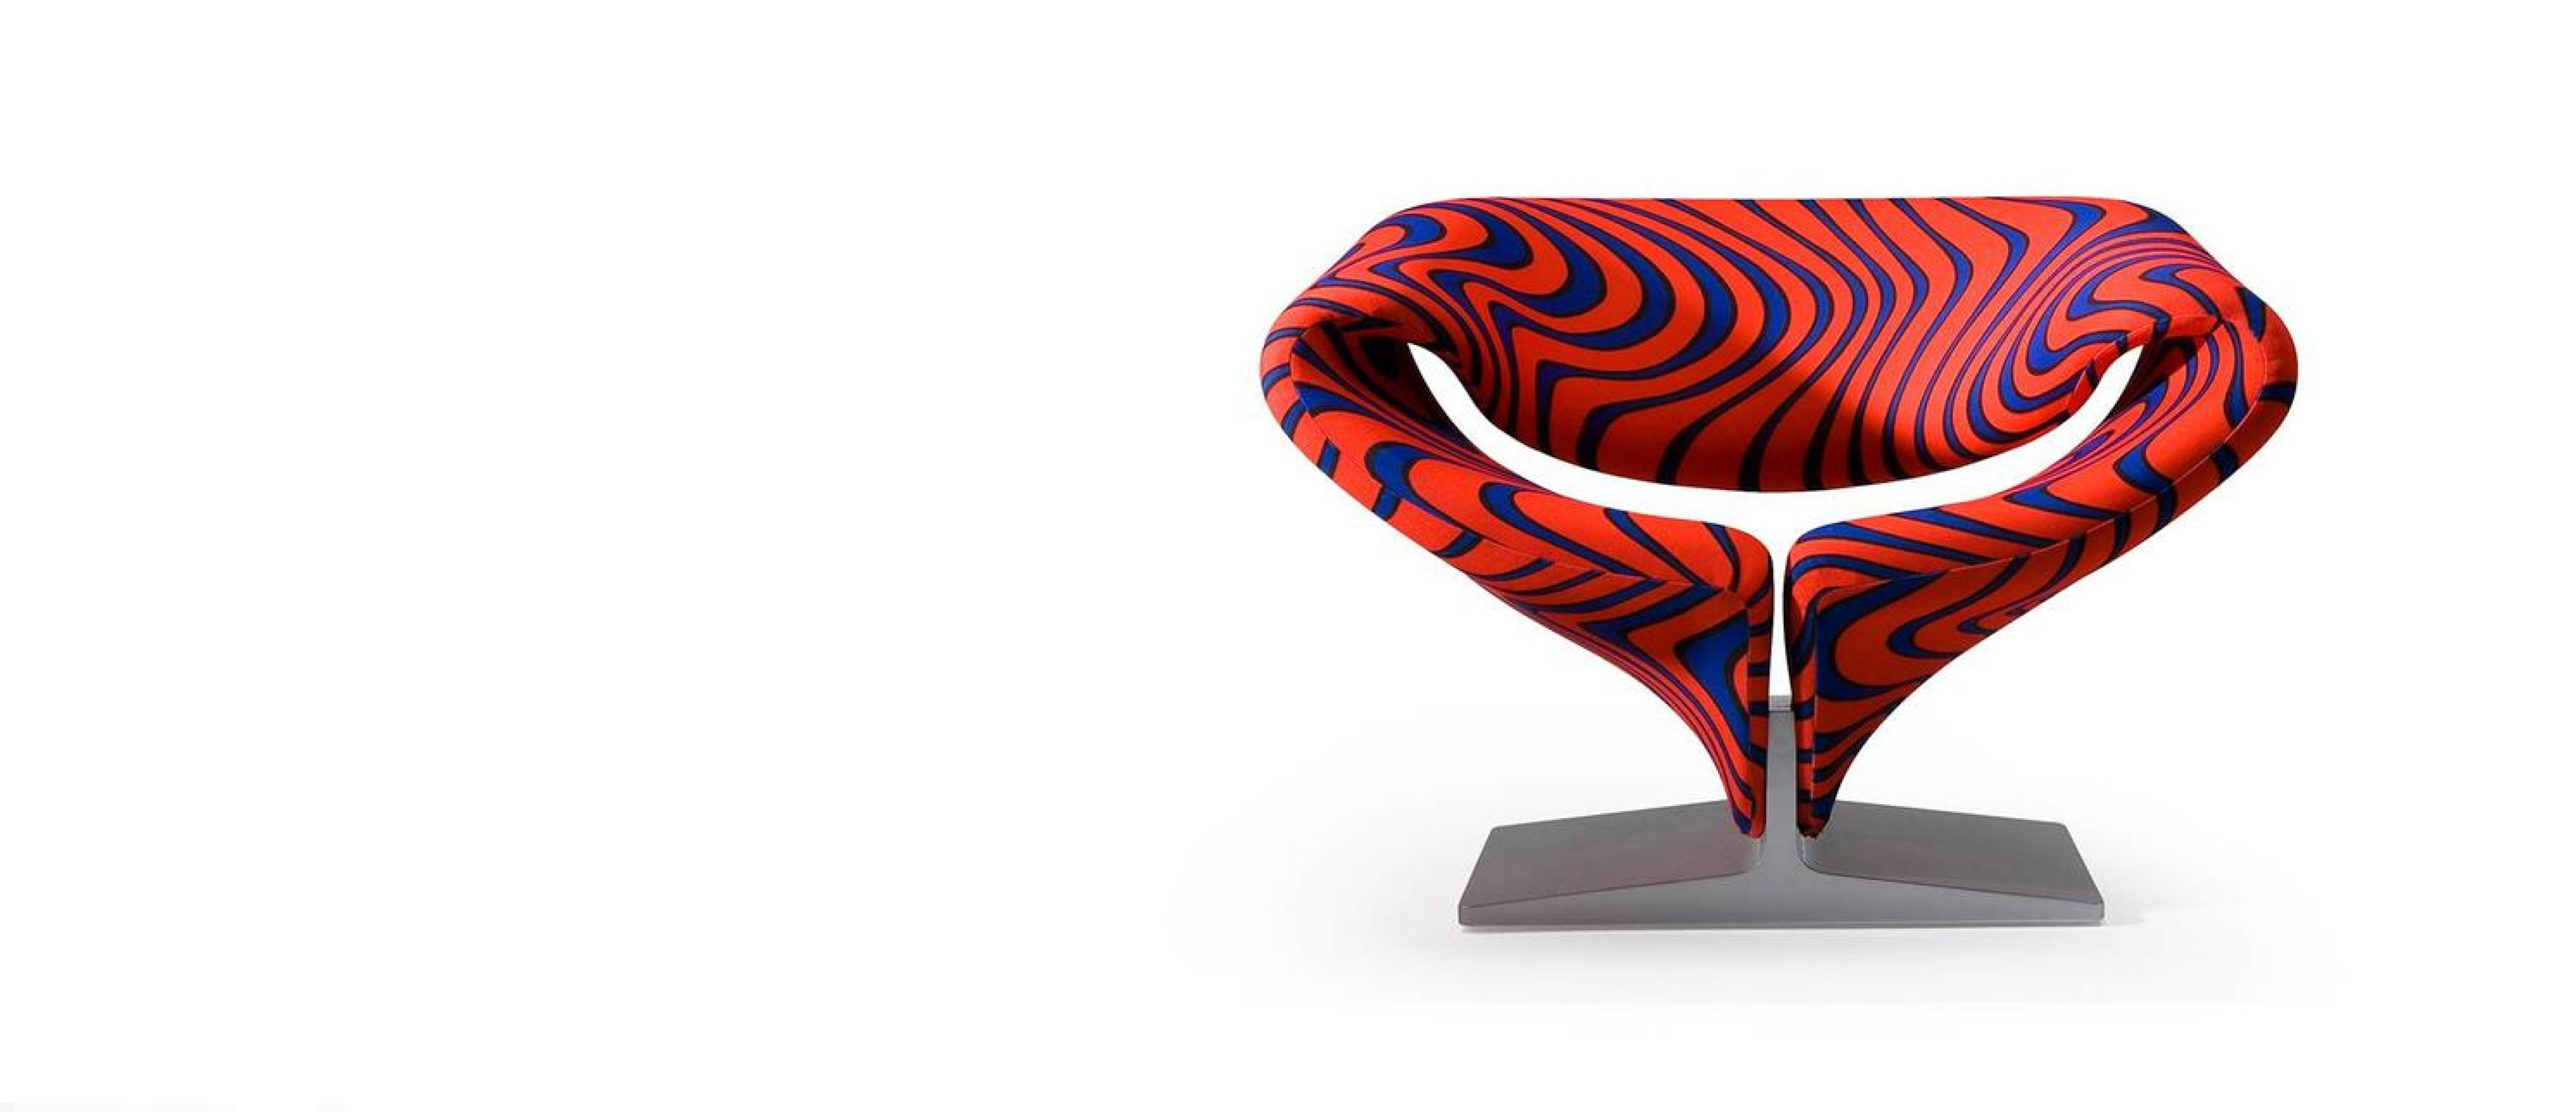 Artifort Ribbon: Der Designer dieses Stuhls verdient ein Band icon category image